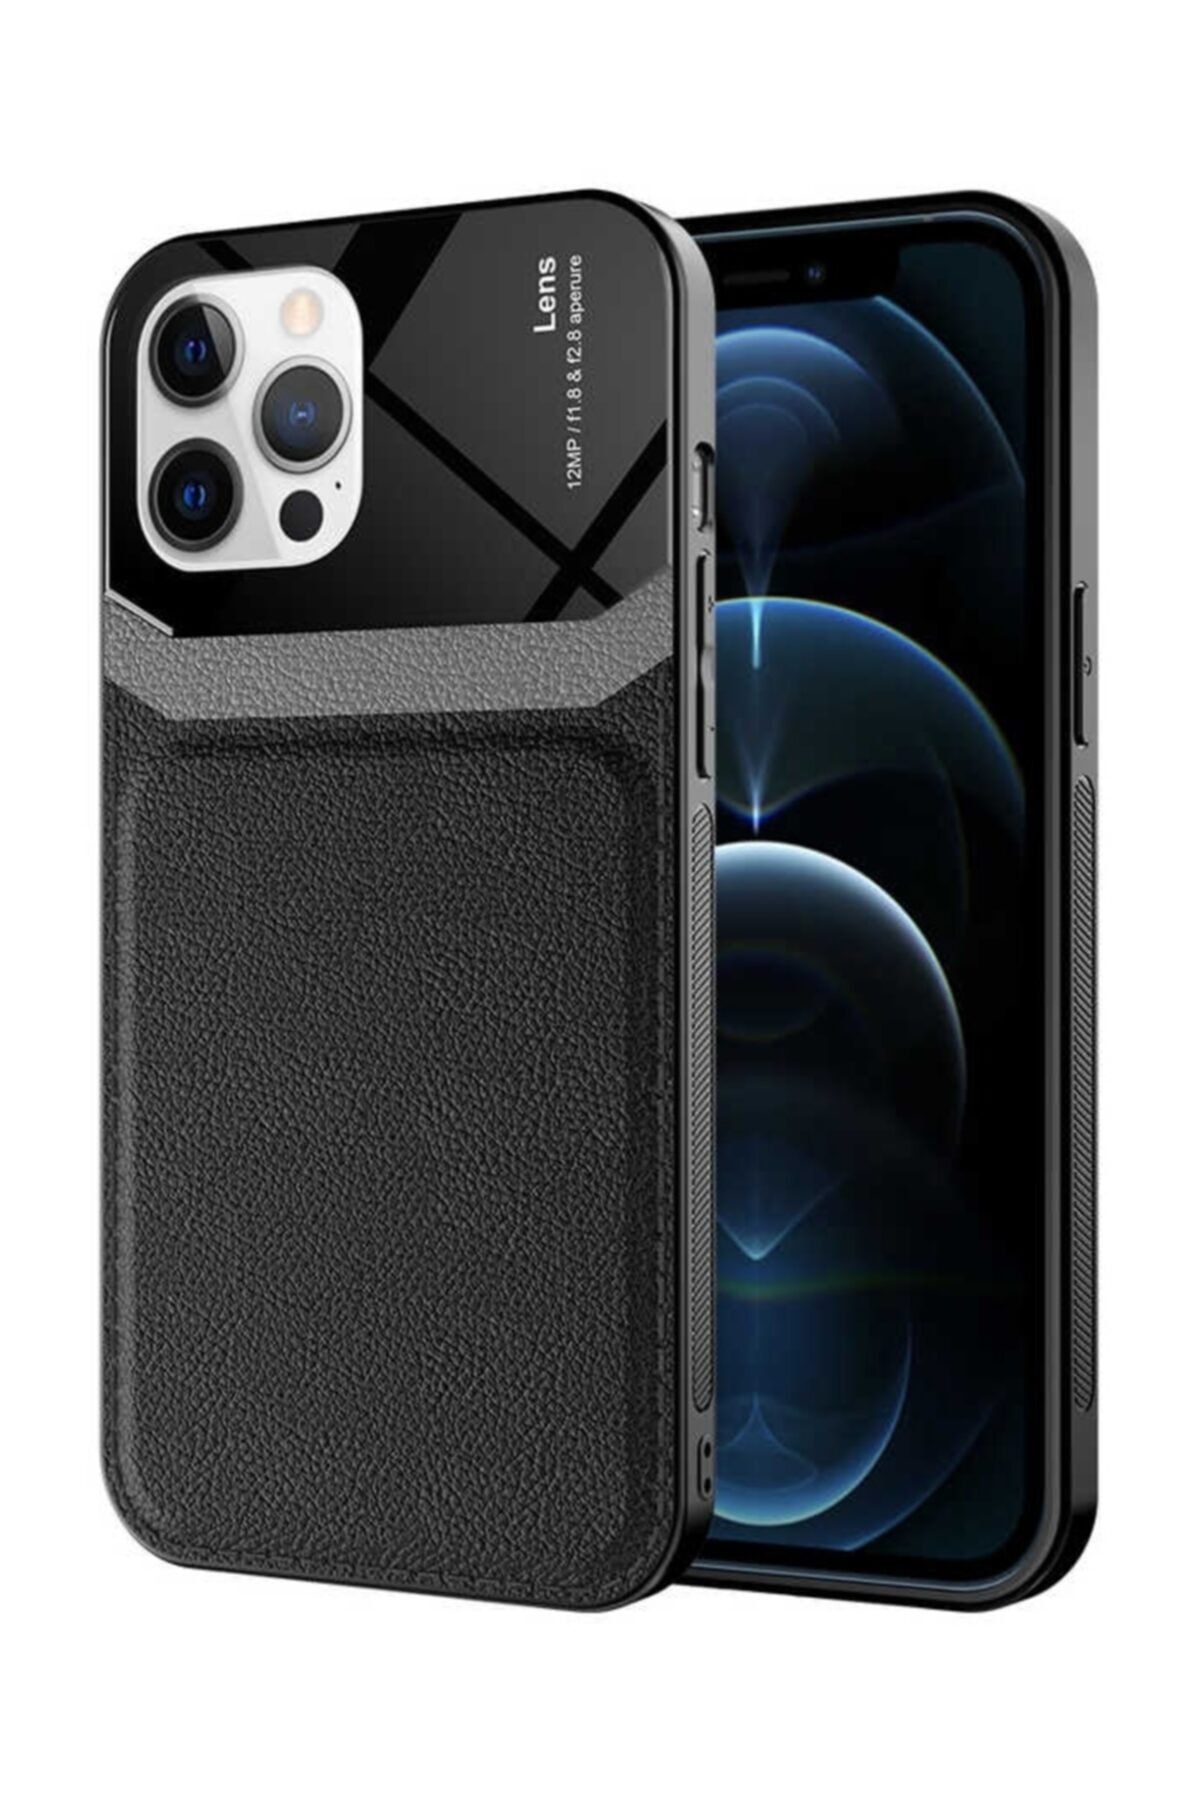 Mobilcadde Eiroo Harbor Iphone 12 Pro Max 6.7 Inç Siyah Silikon Kılıf